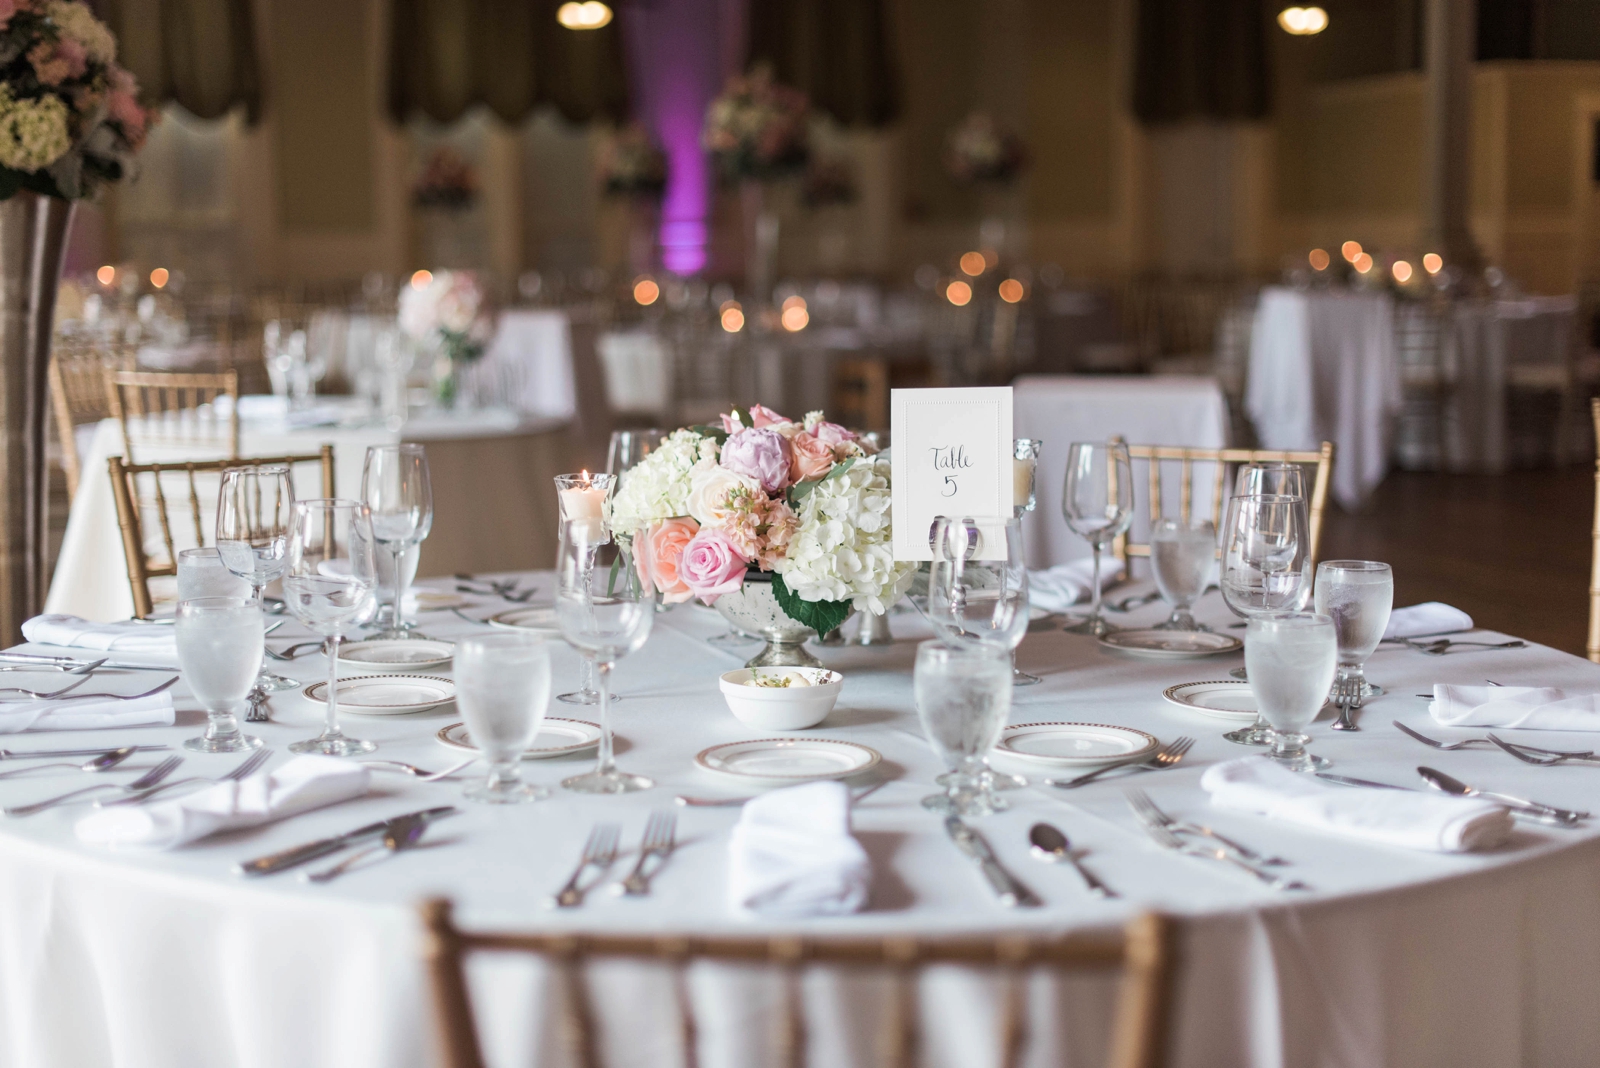 Chatauqua Lake Athenaeum Hotel Wedding reception decor details blush and gold chiavari chairs